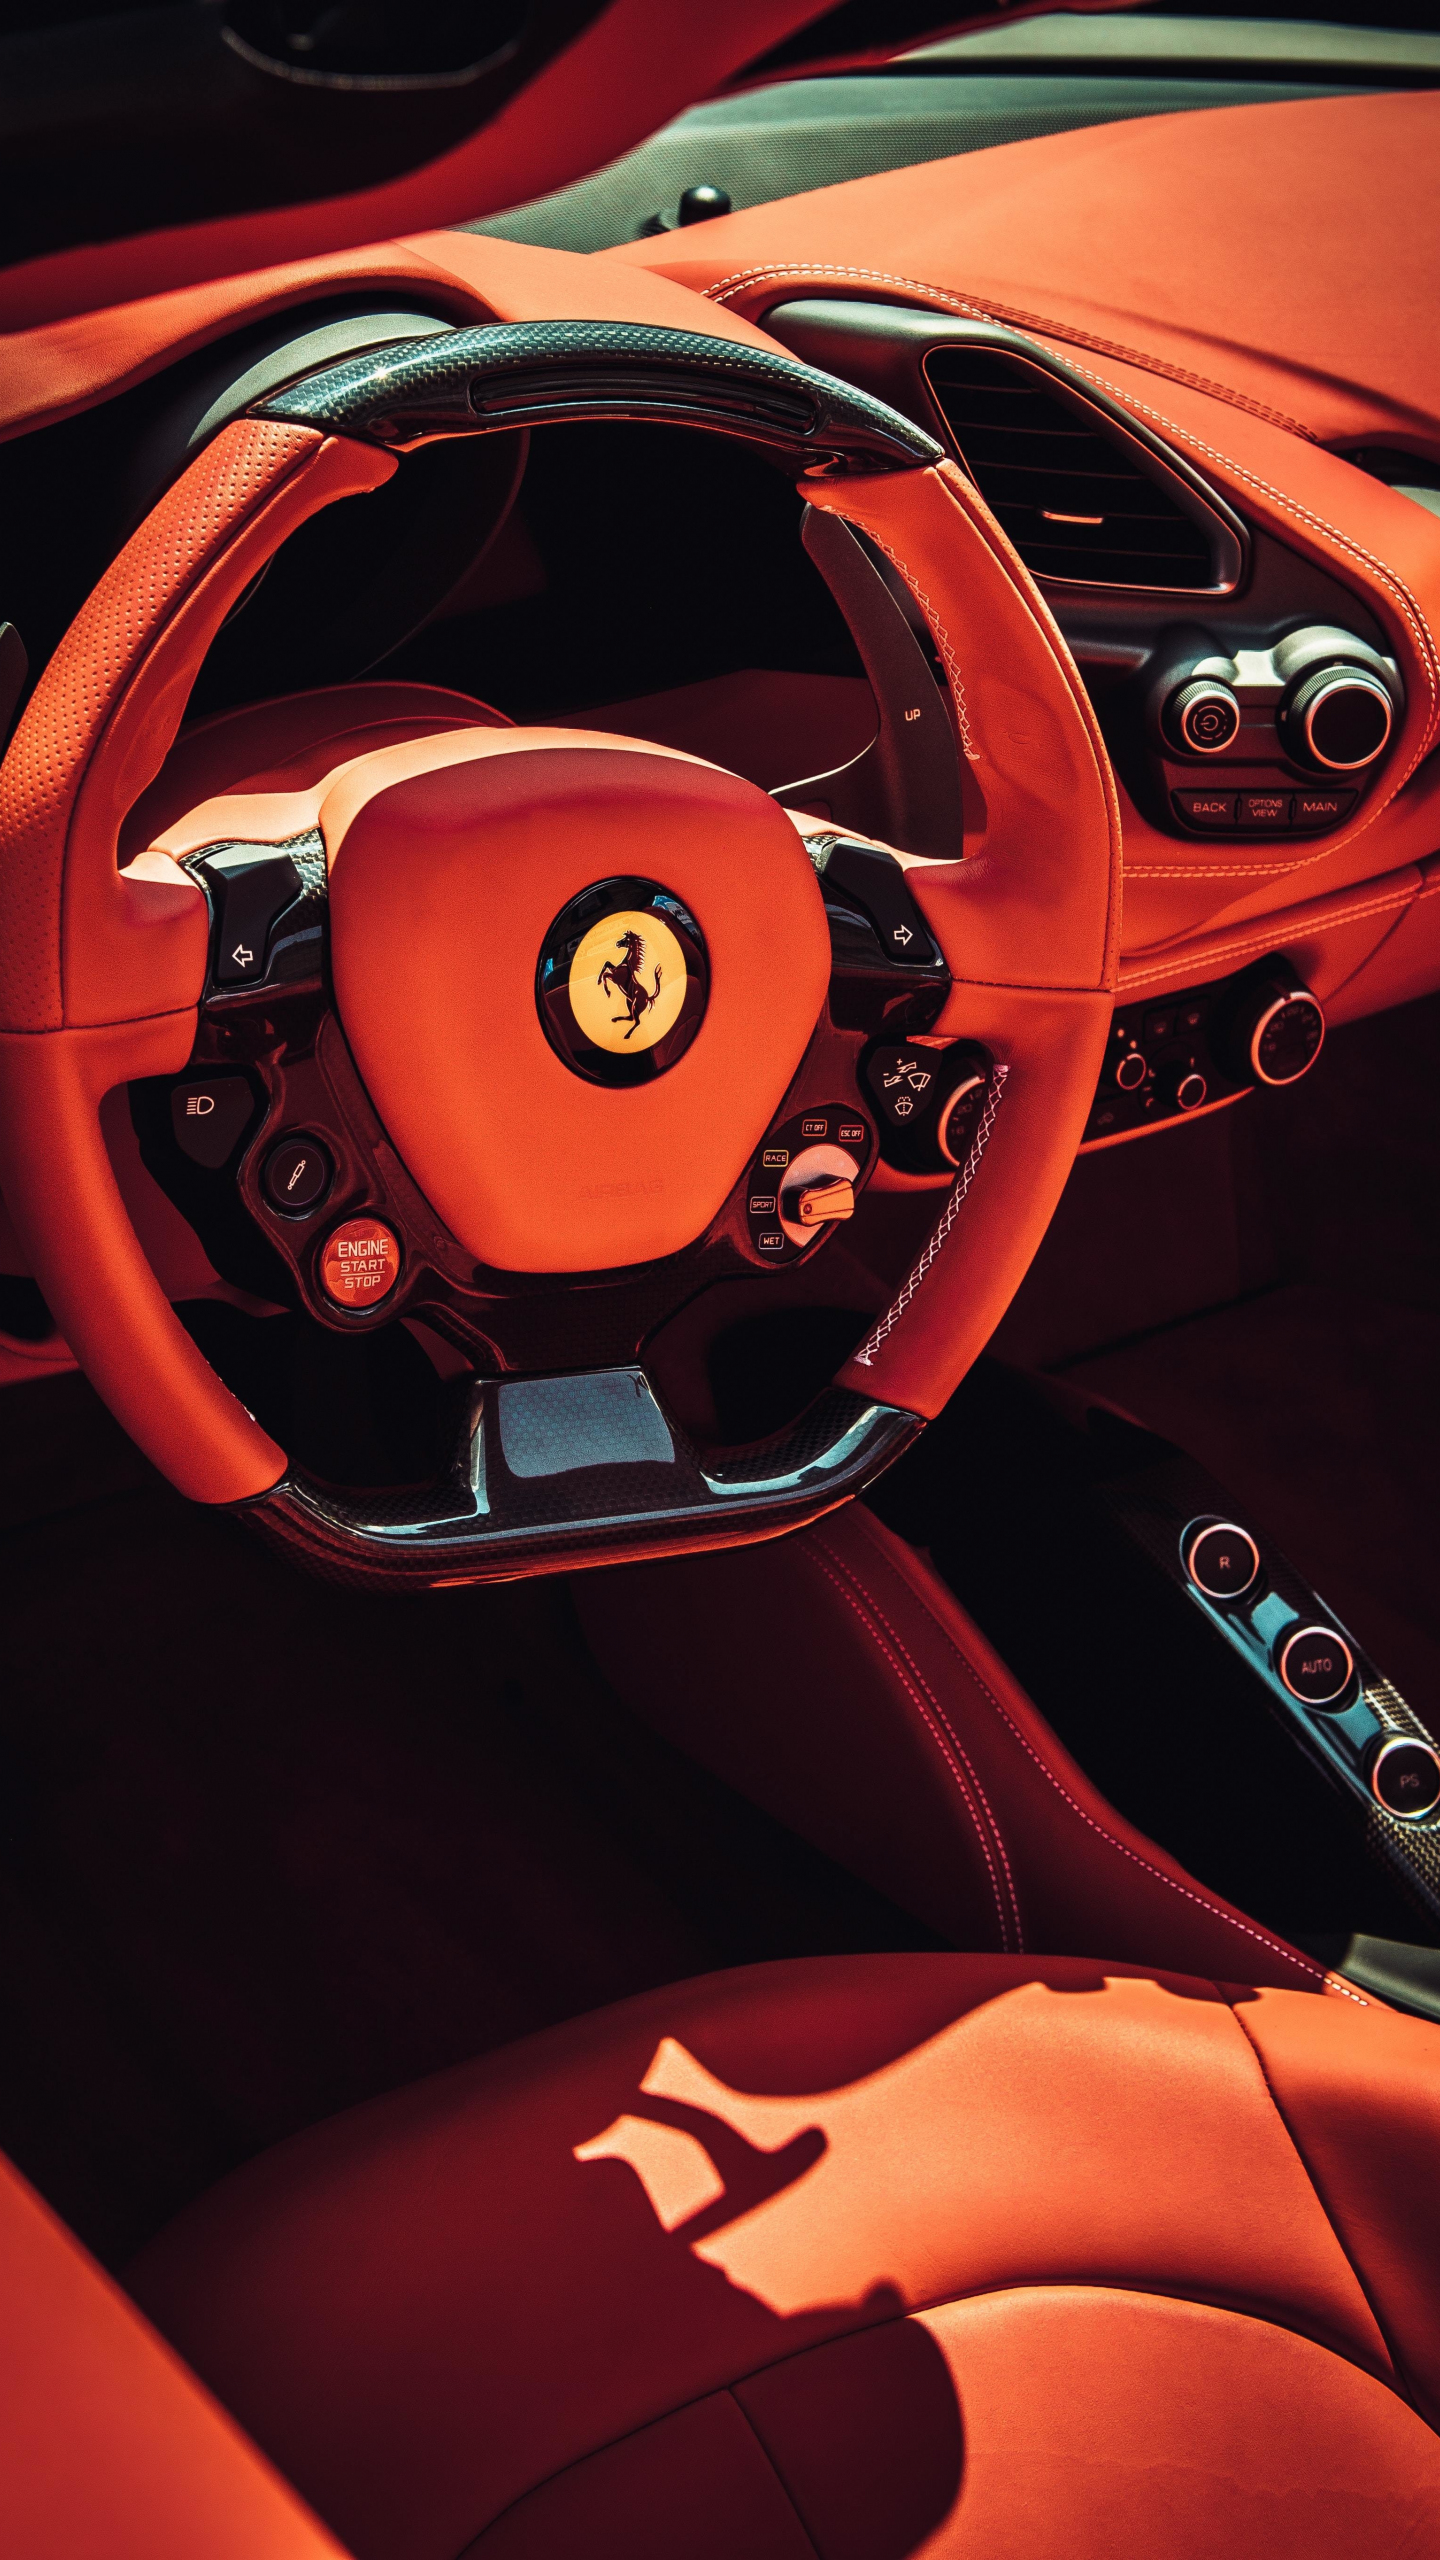 Download 1440x2560 Wallpaper Ferrari Car Steering Interior Qhd Samsung Galaxy S6 S7 Edge Note Lg G4 1440x2560 Hd Image Background 22134